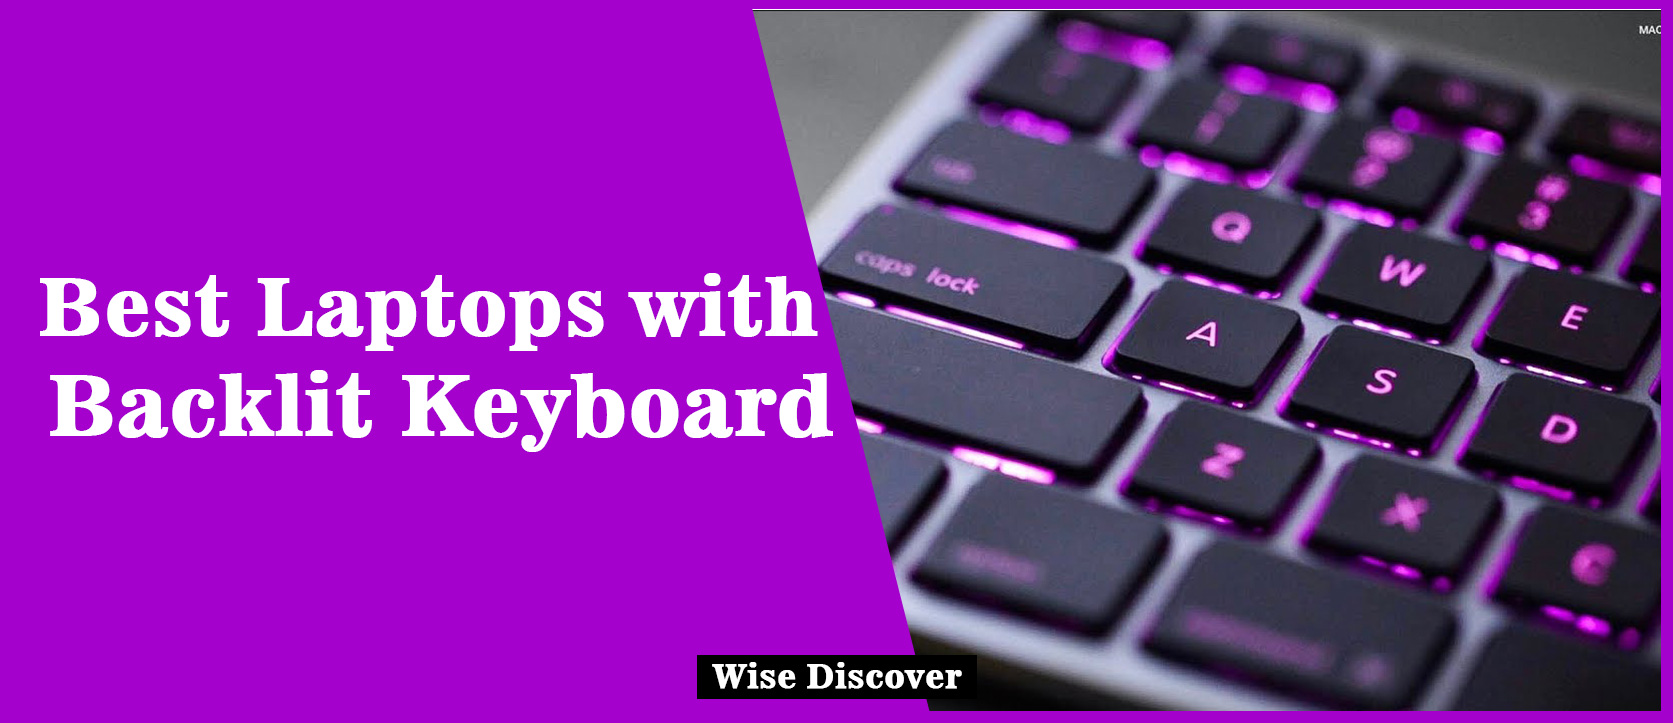 Best-Laptops-with-Backlit-Keyboard